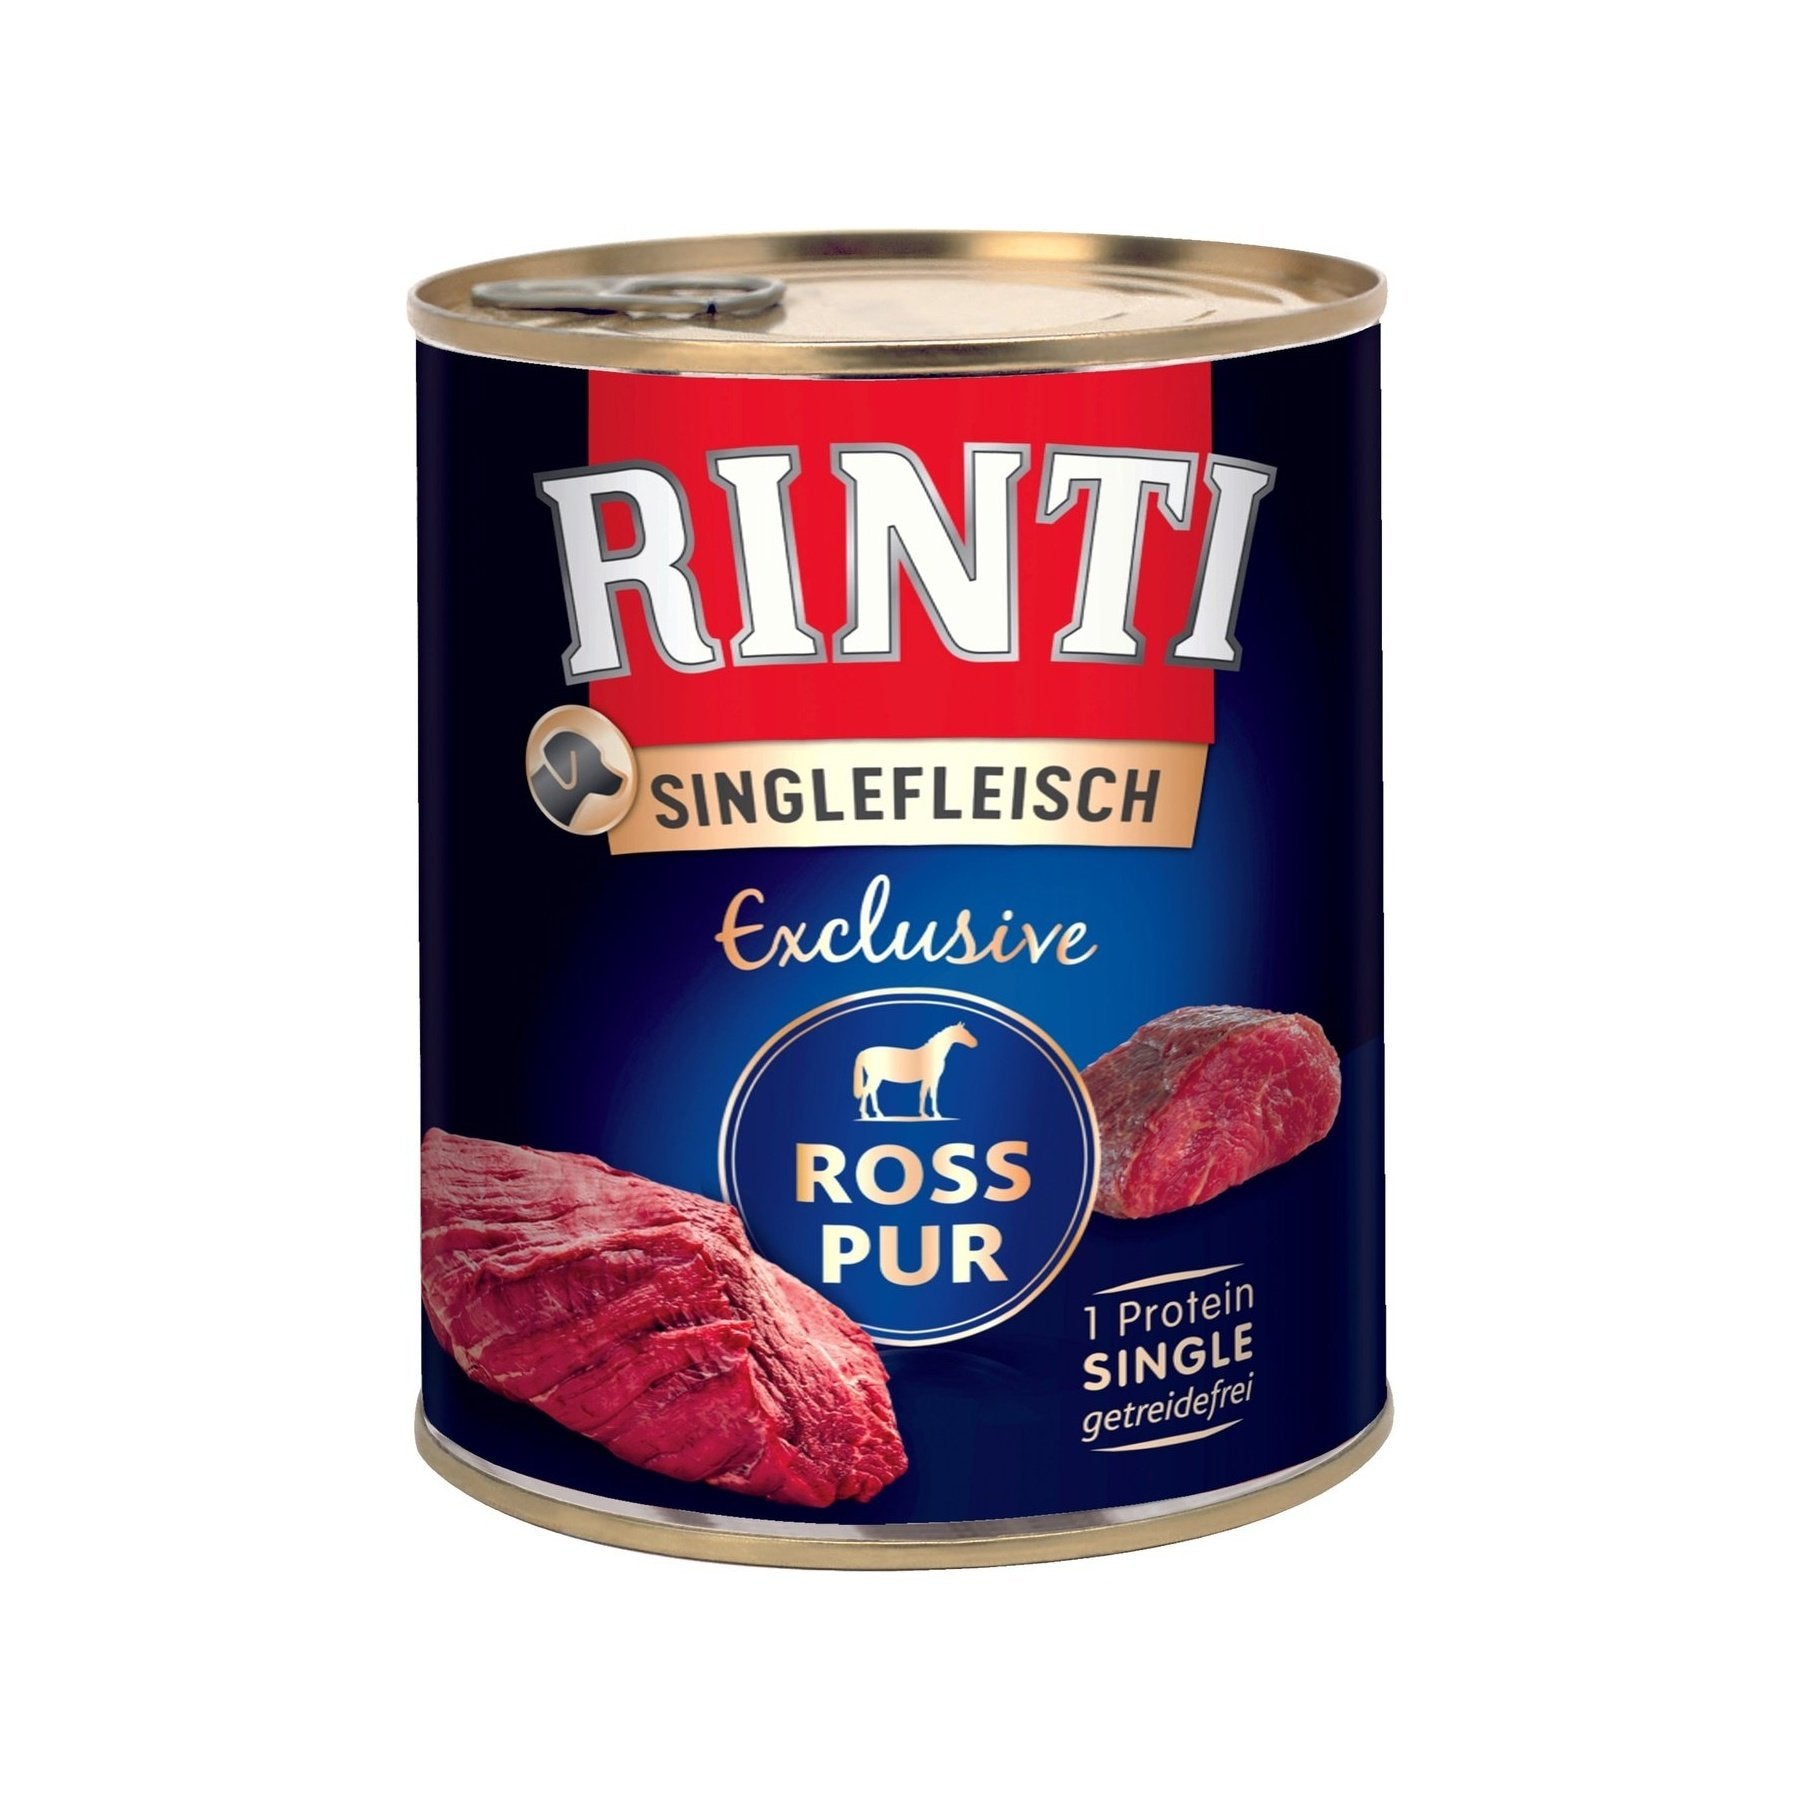 Rinti Singlefleisch Exclusive Ross Pur - zoo.de